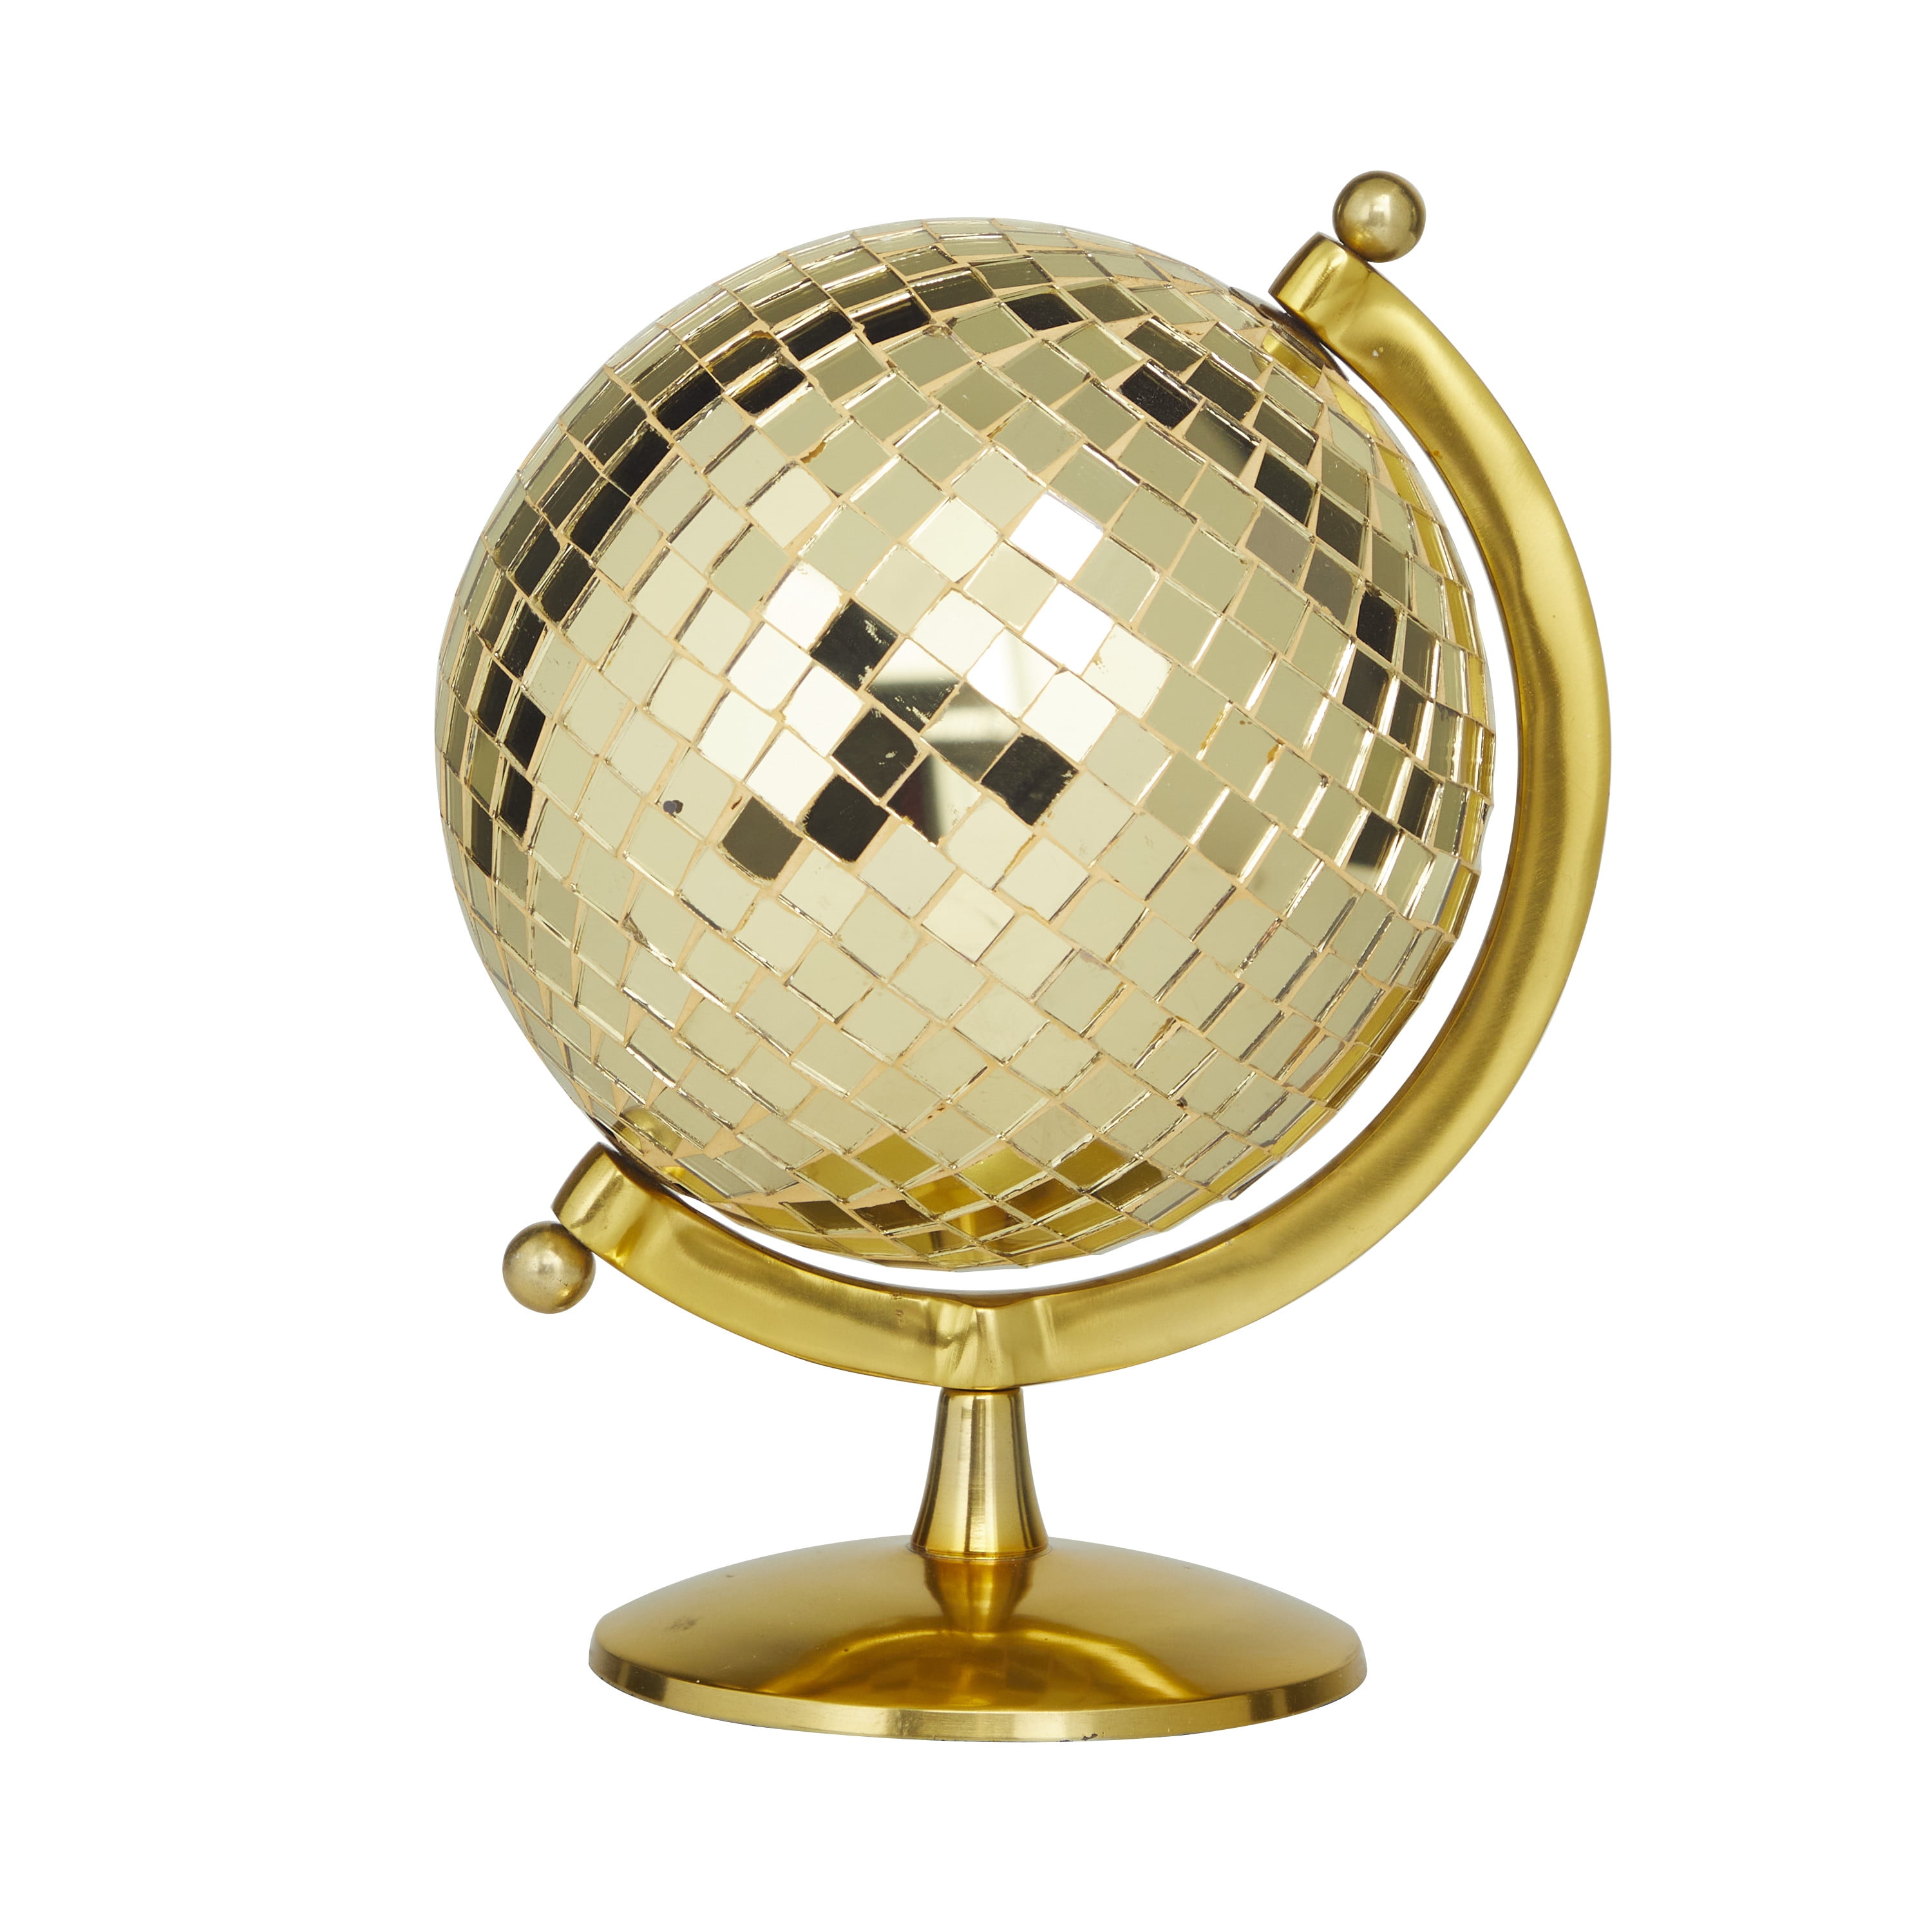 The Novogratz 8 inch Disco Ball Style Gold Globe